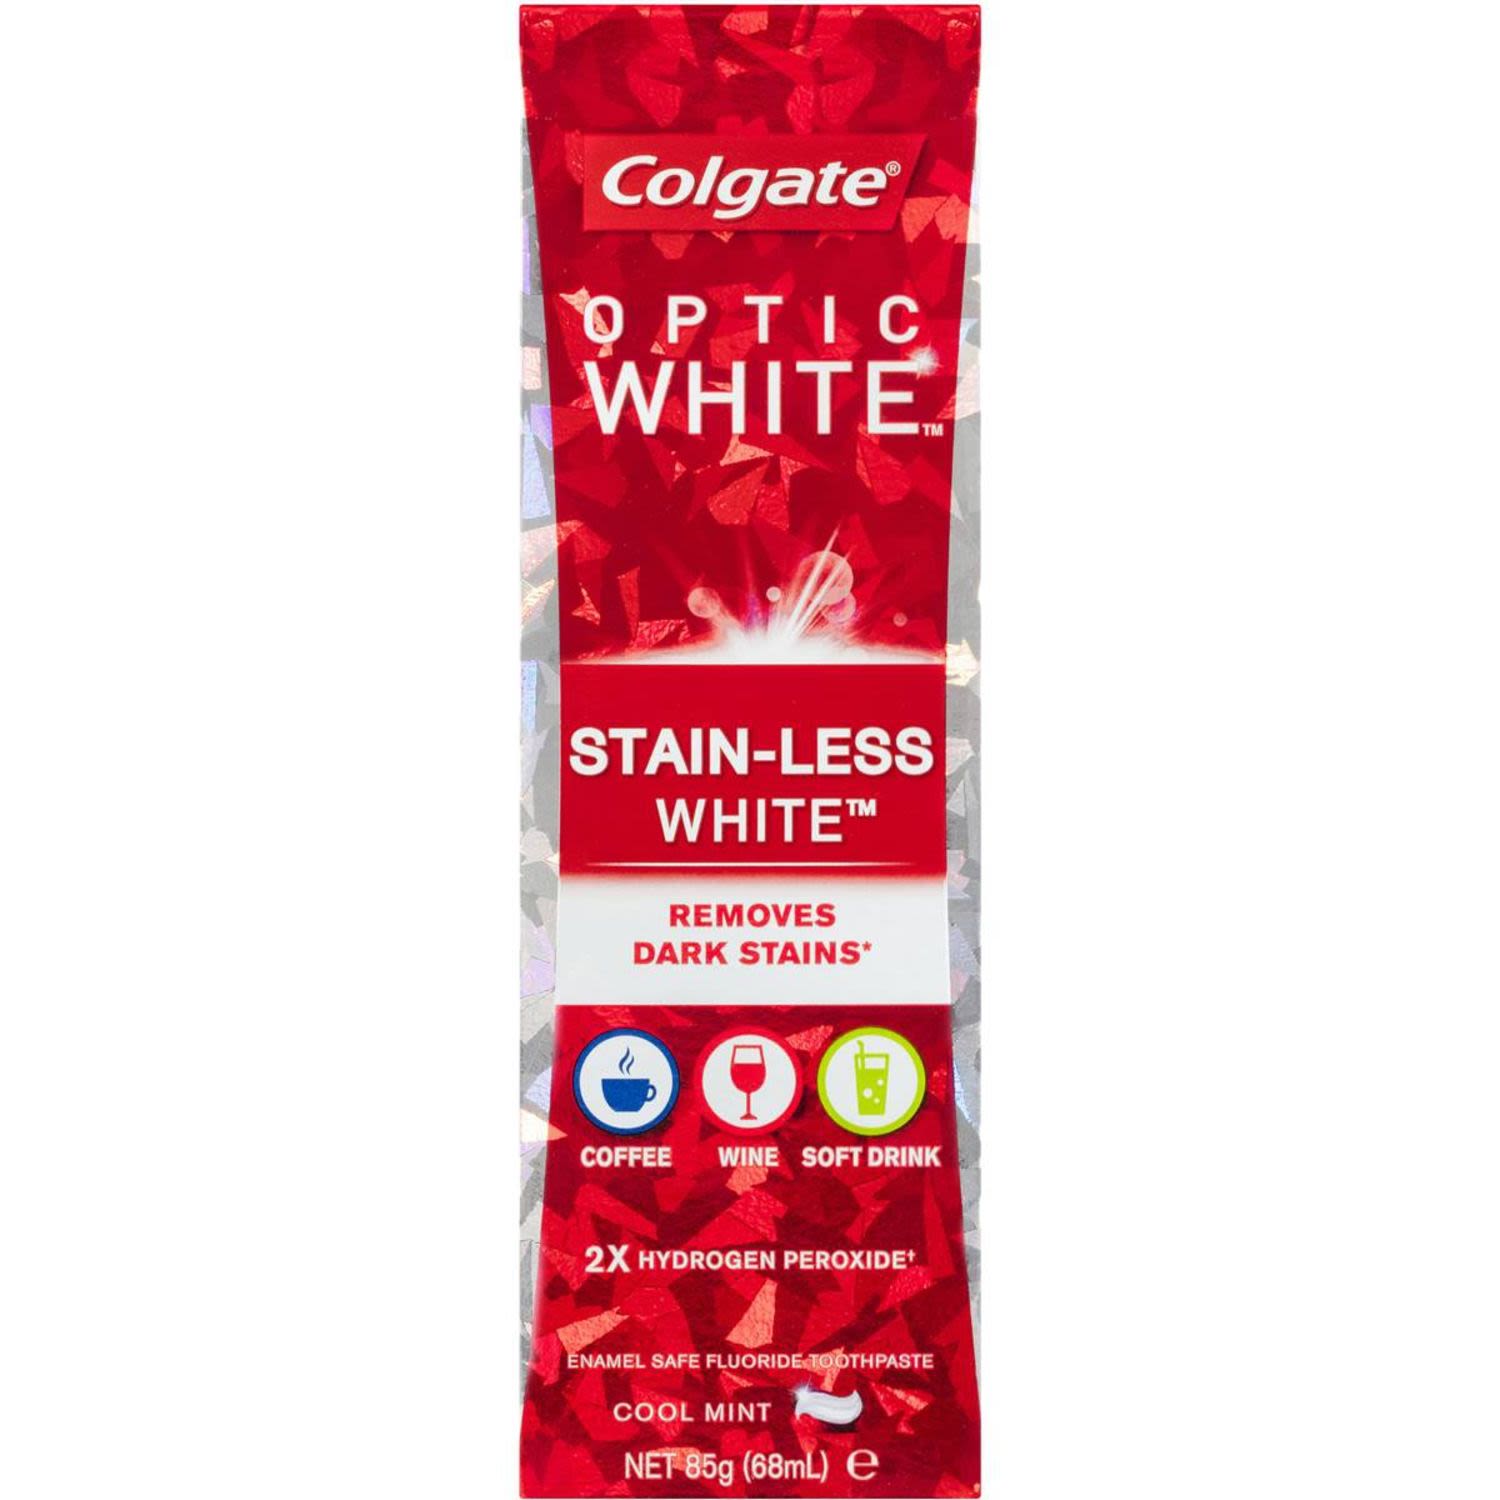 Colgate Optic White Stainless White Teeth Whitening Toothpaste, 85 Gram